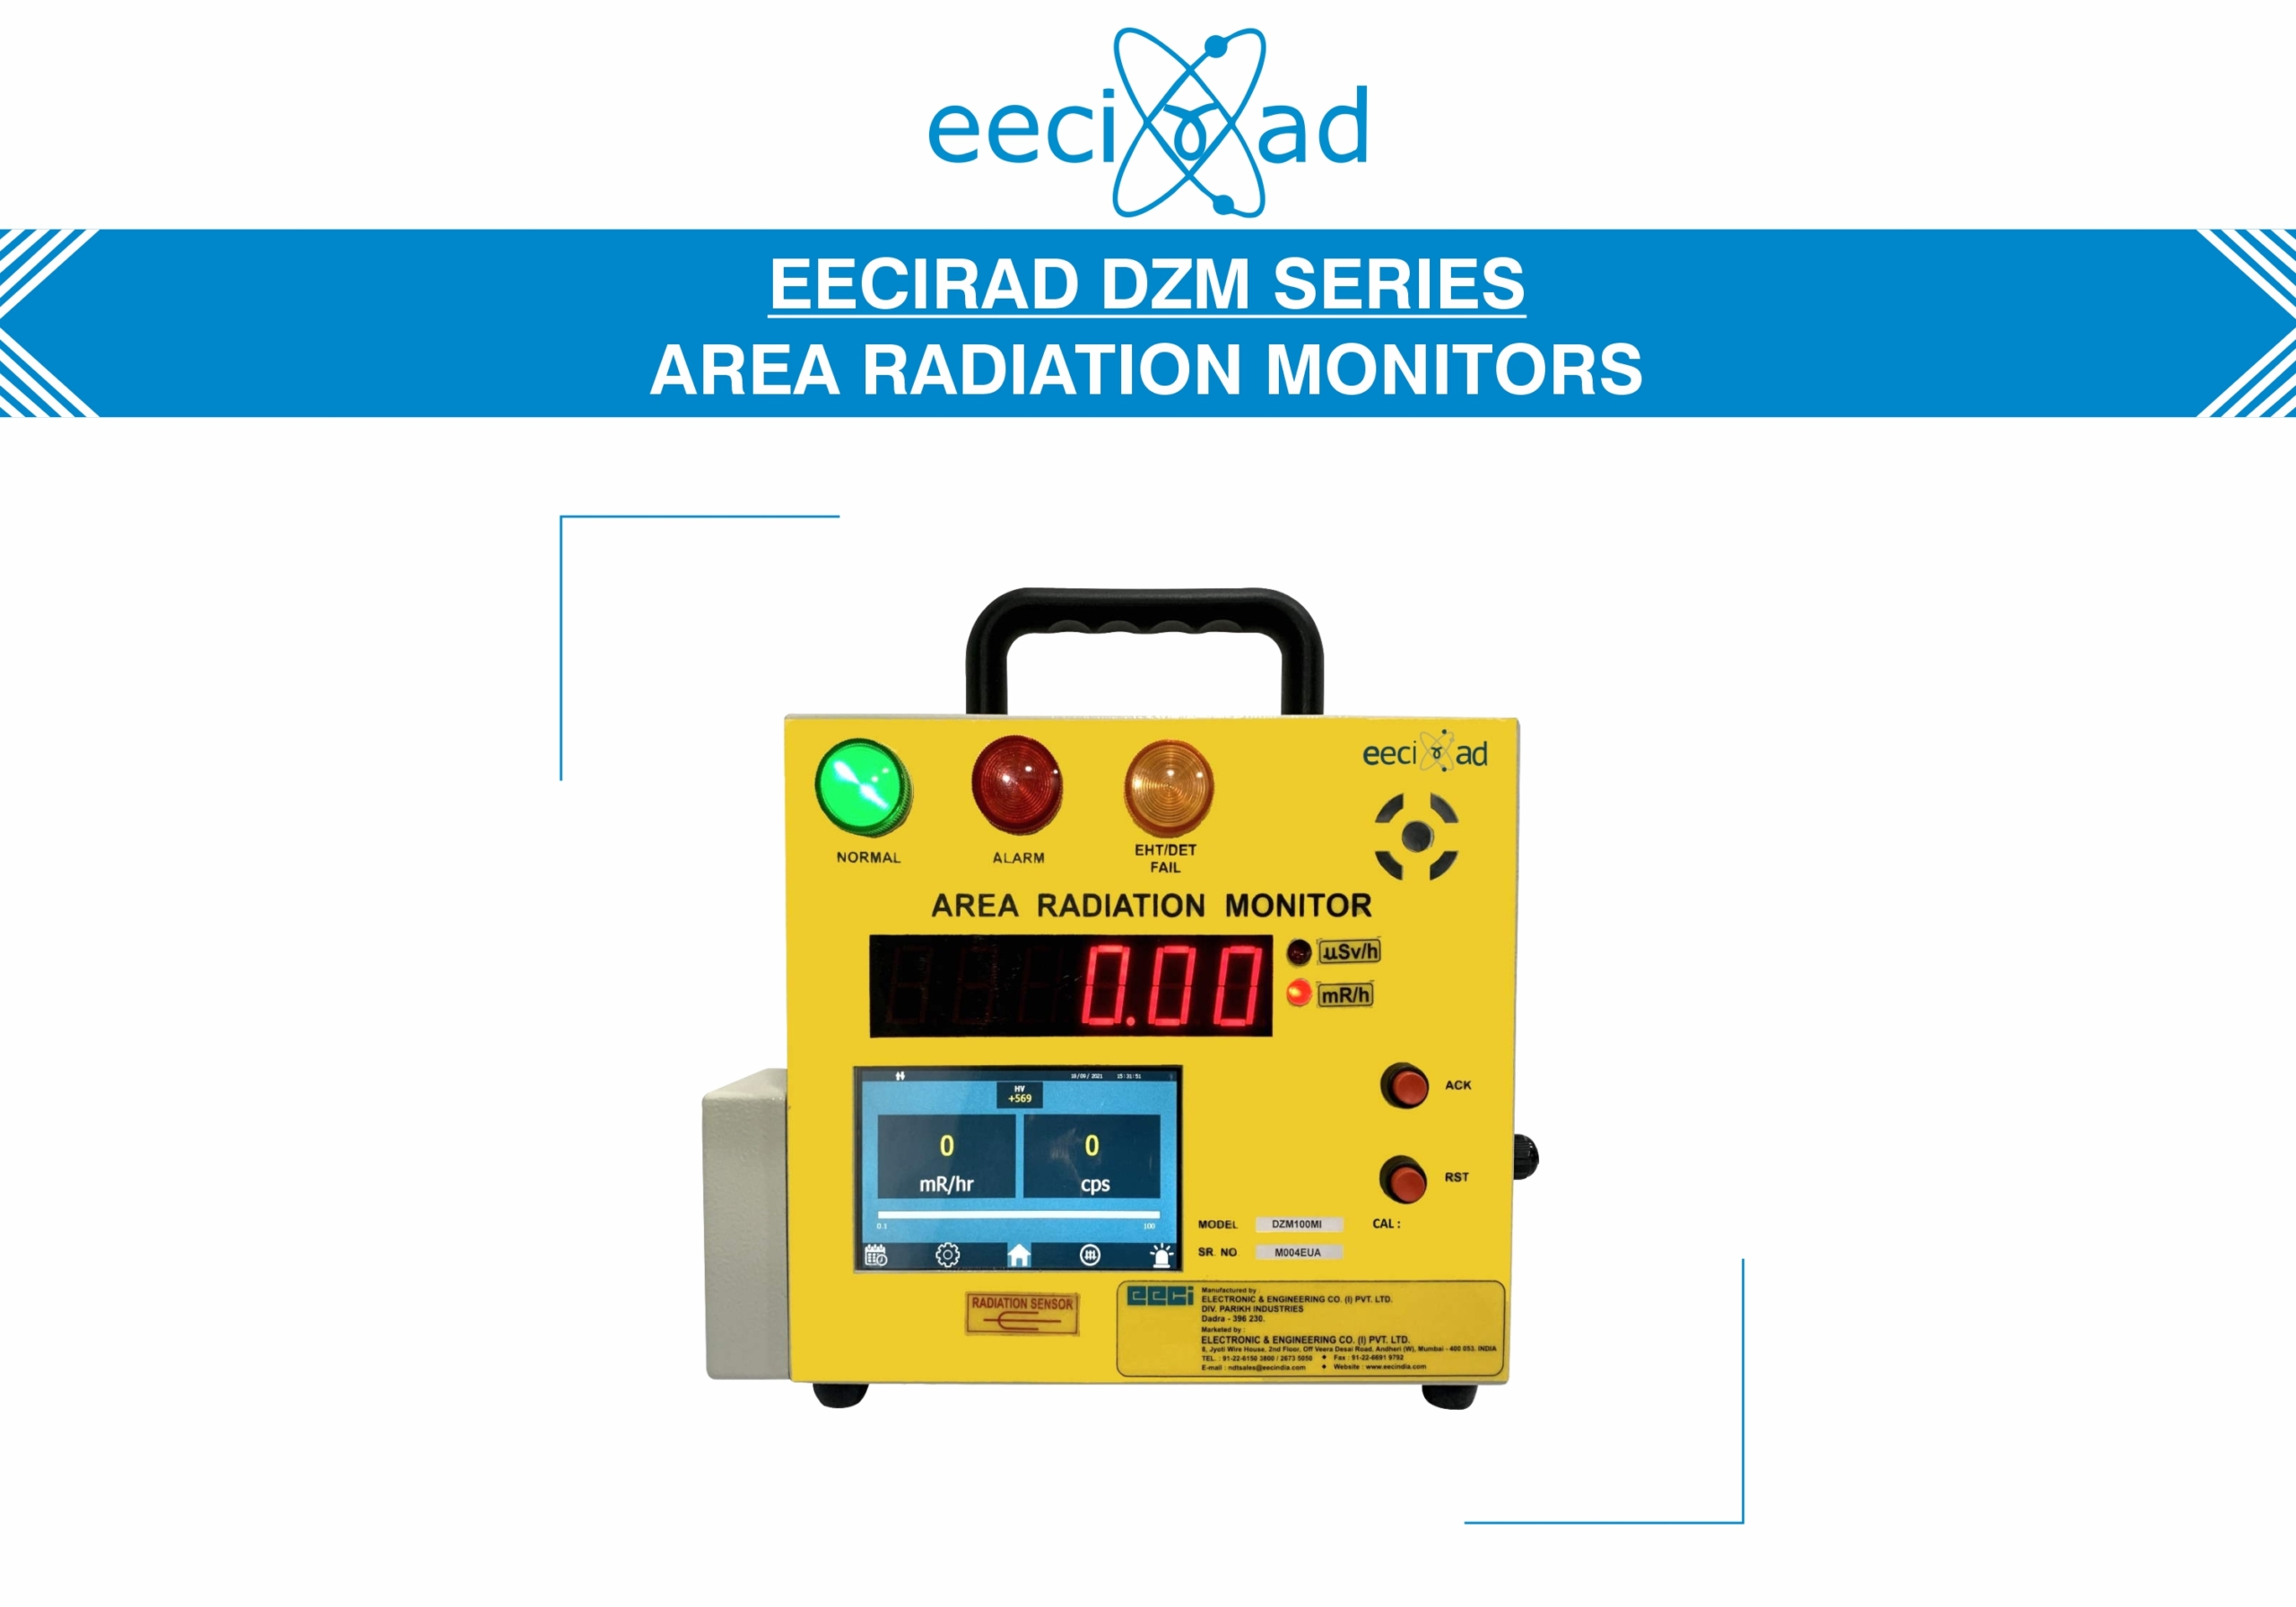 EECIRAD DZM SERIES (AREA RADIATION MONITORS)